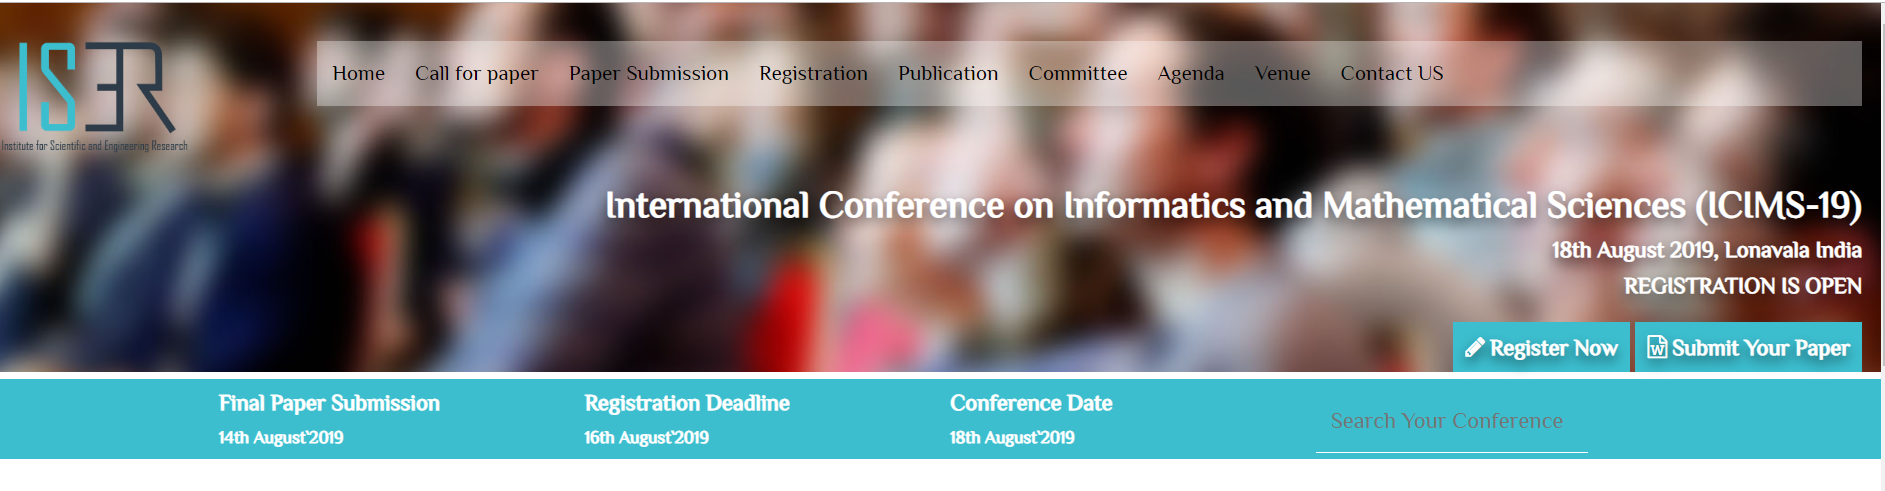 International Conference on Informatics and Mathematical Sciences (ICIMS-19), Lonavala, Maharashtra, India